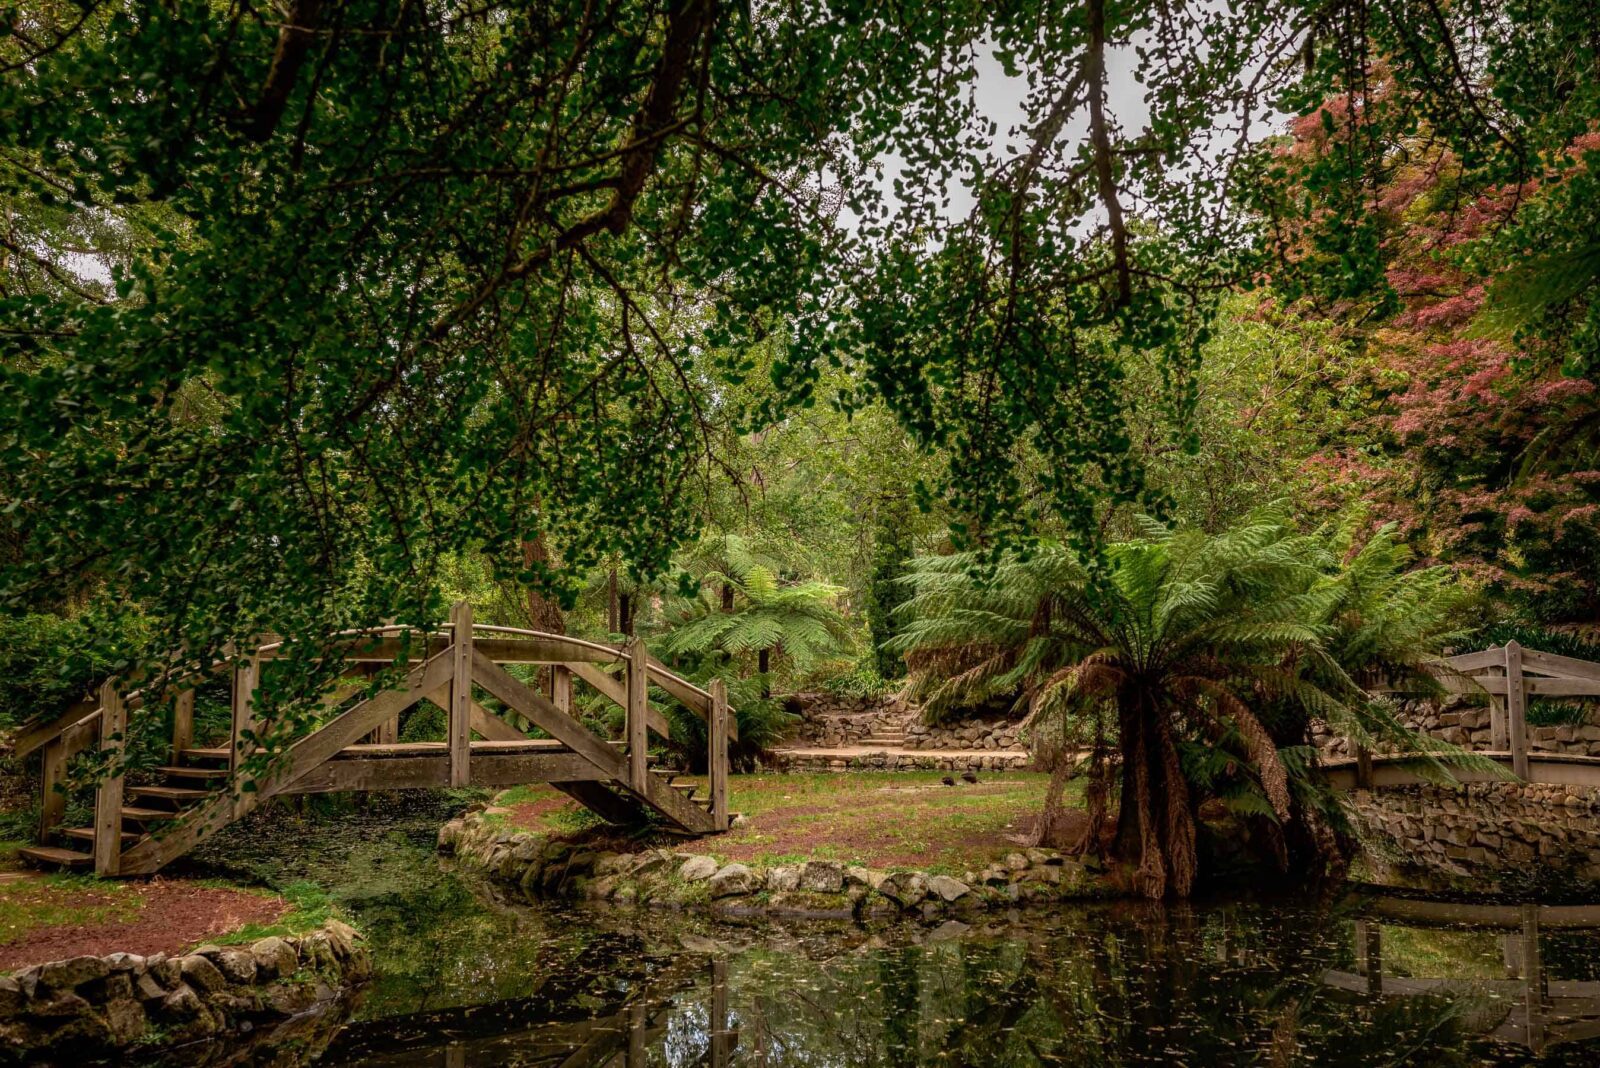 Bridge over the ornamental lake at Alfred Nicholas Gardens